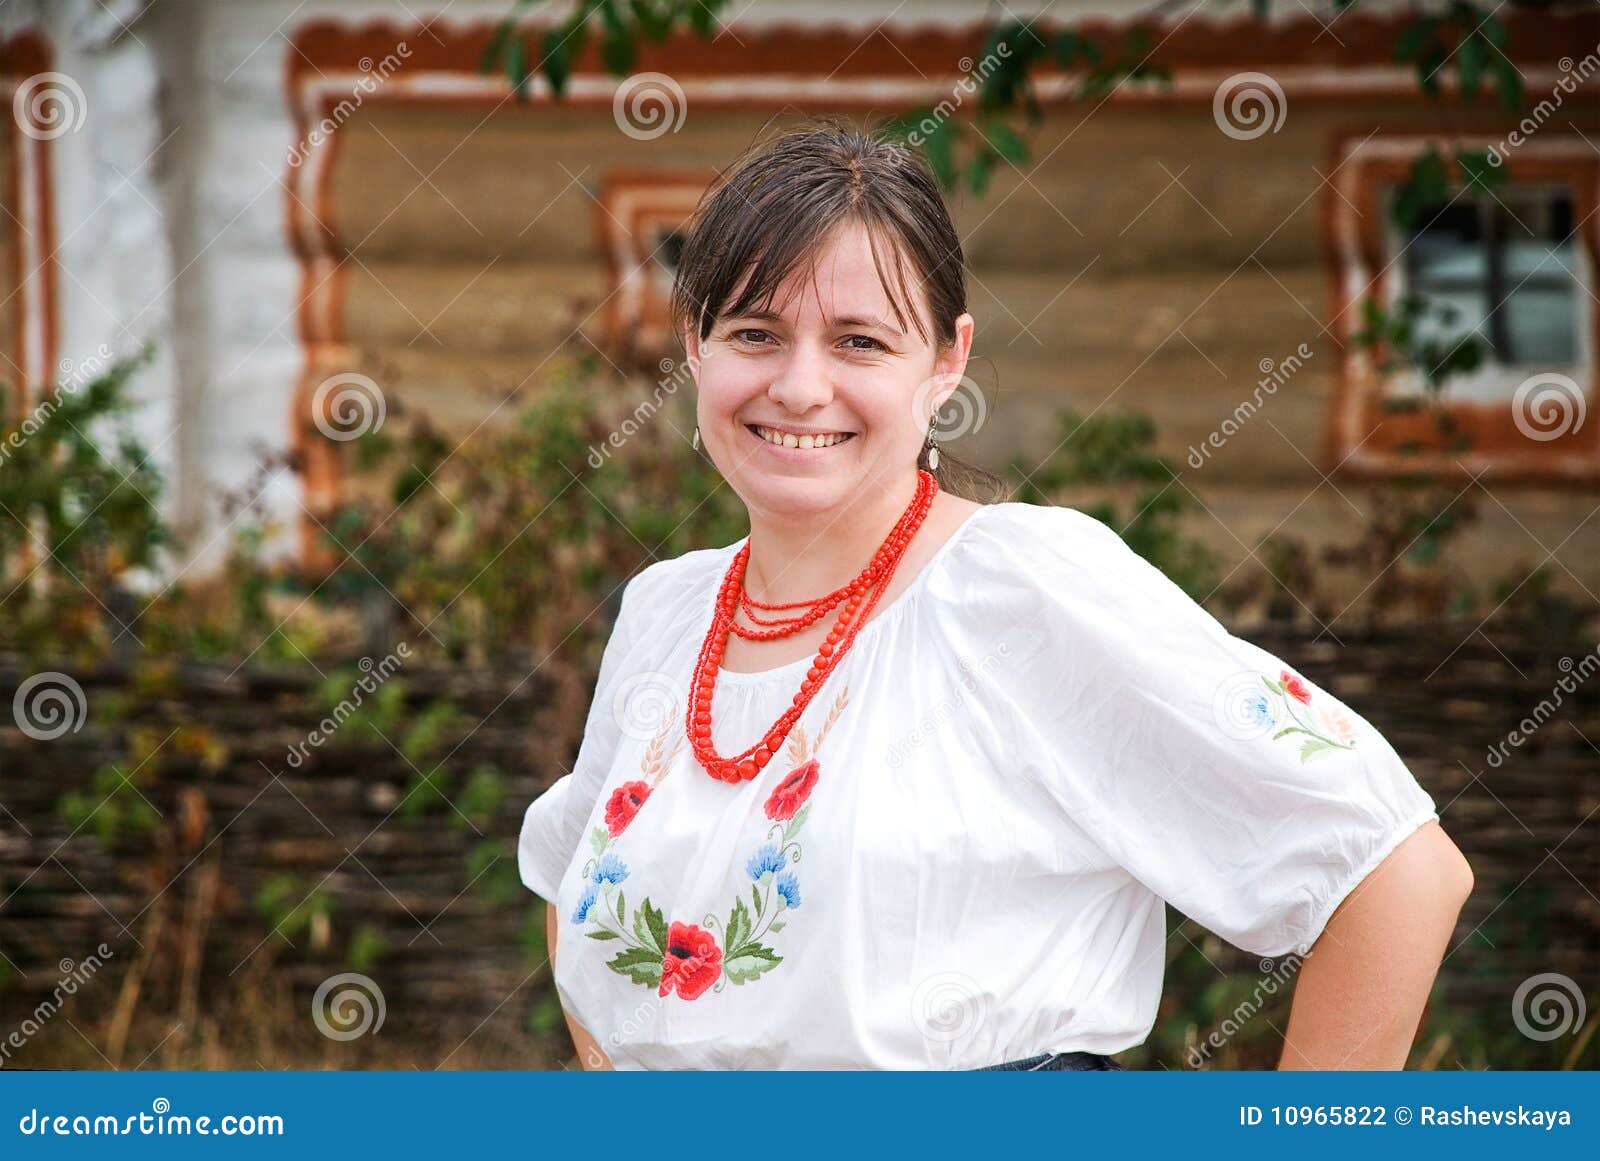 Ukrainian woman stock photo. Image of scene, ethnic, hair - 10965822